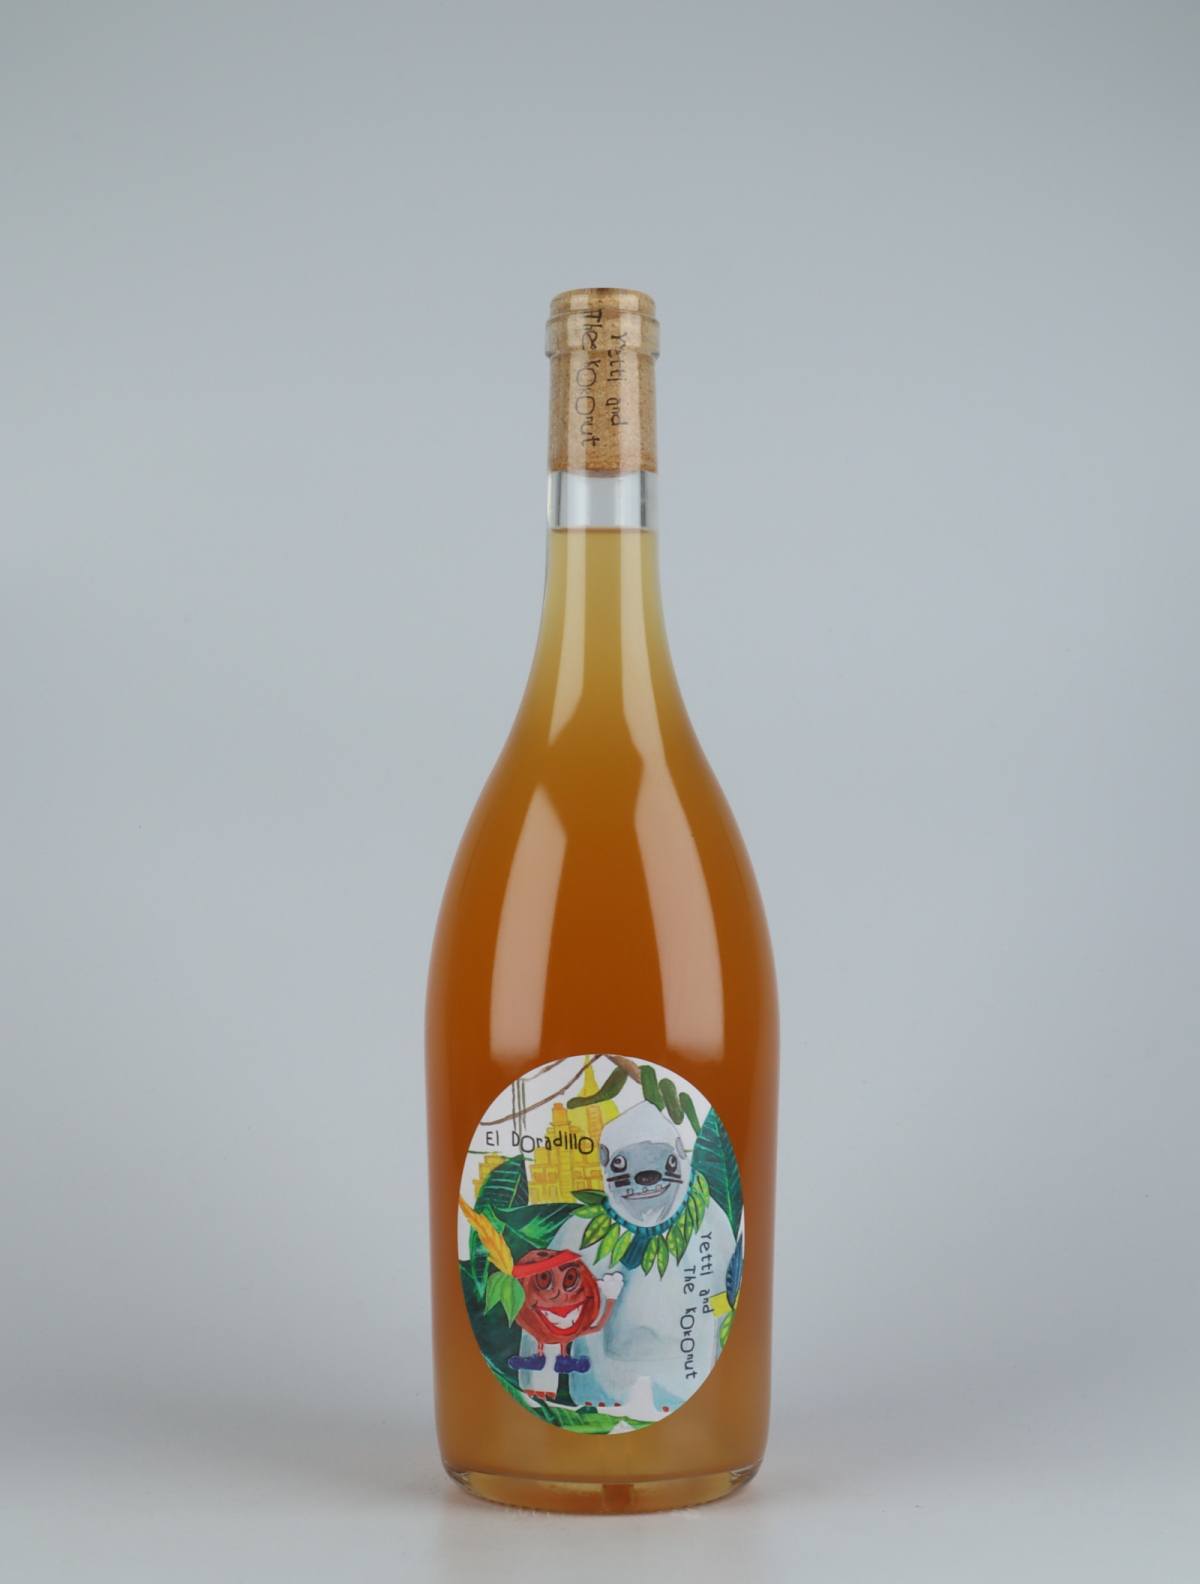 A bottle 2020 El Doradillo White wine from Yetti and the Kokonut, Barossa Valley in Australia